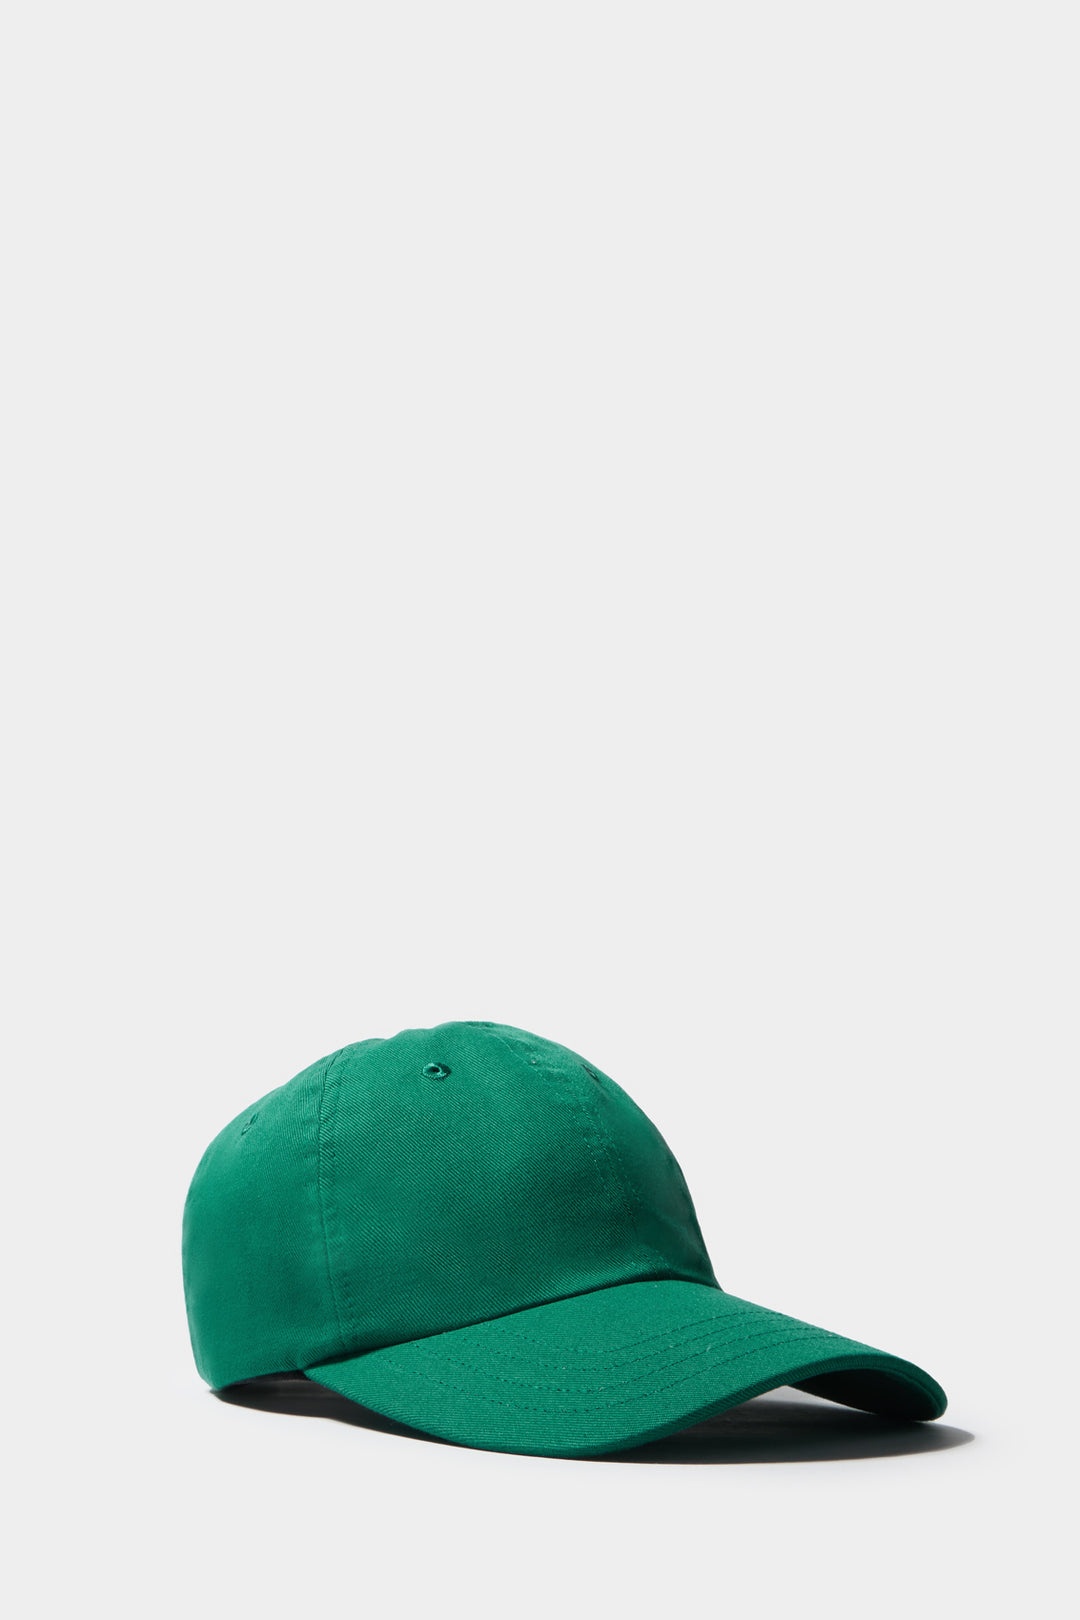 EIWS BASEBALL CAP / emerald green - 1